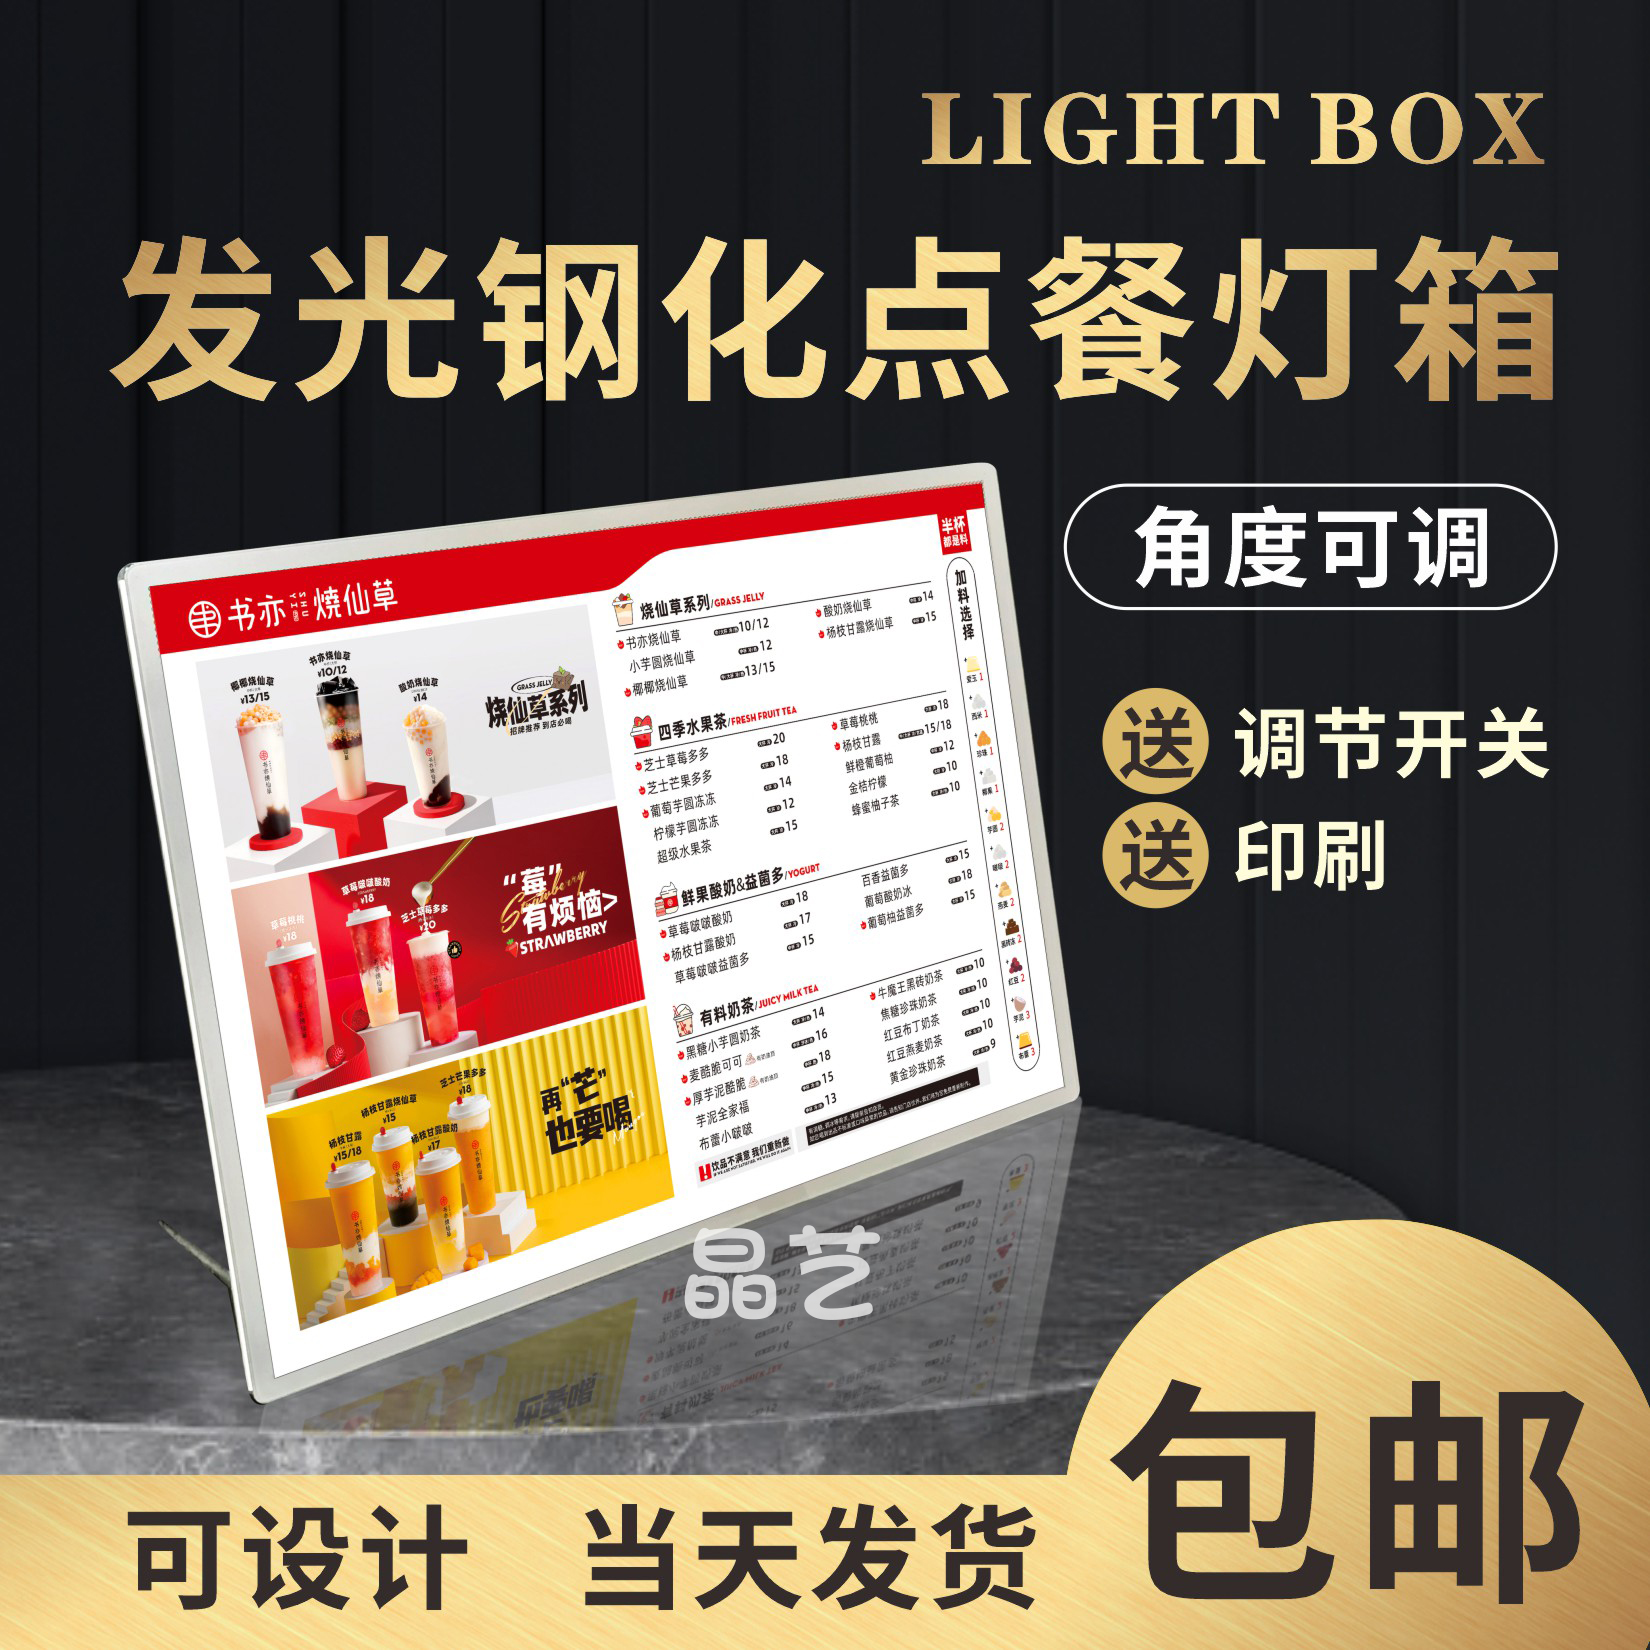 LED发光价目表奶茶吧台点餐灯箱 设计广告菜单展示牌超薄水晶灯箱